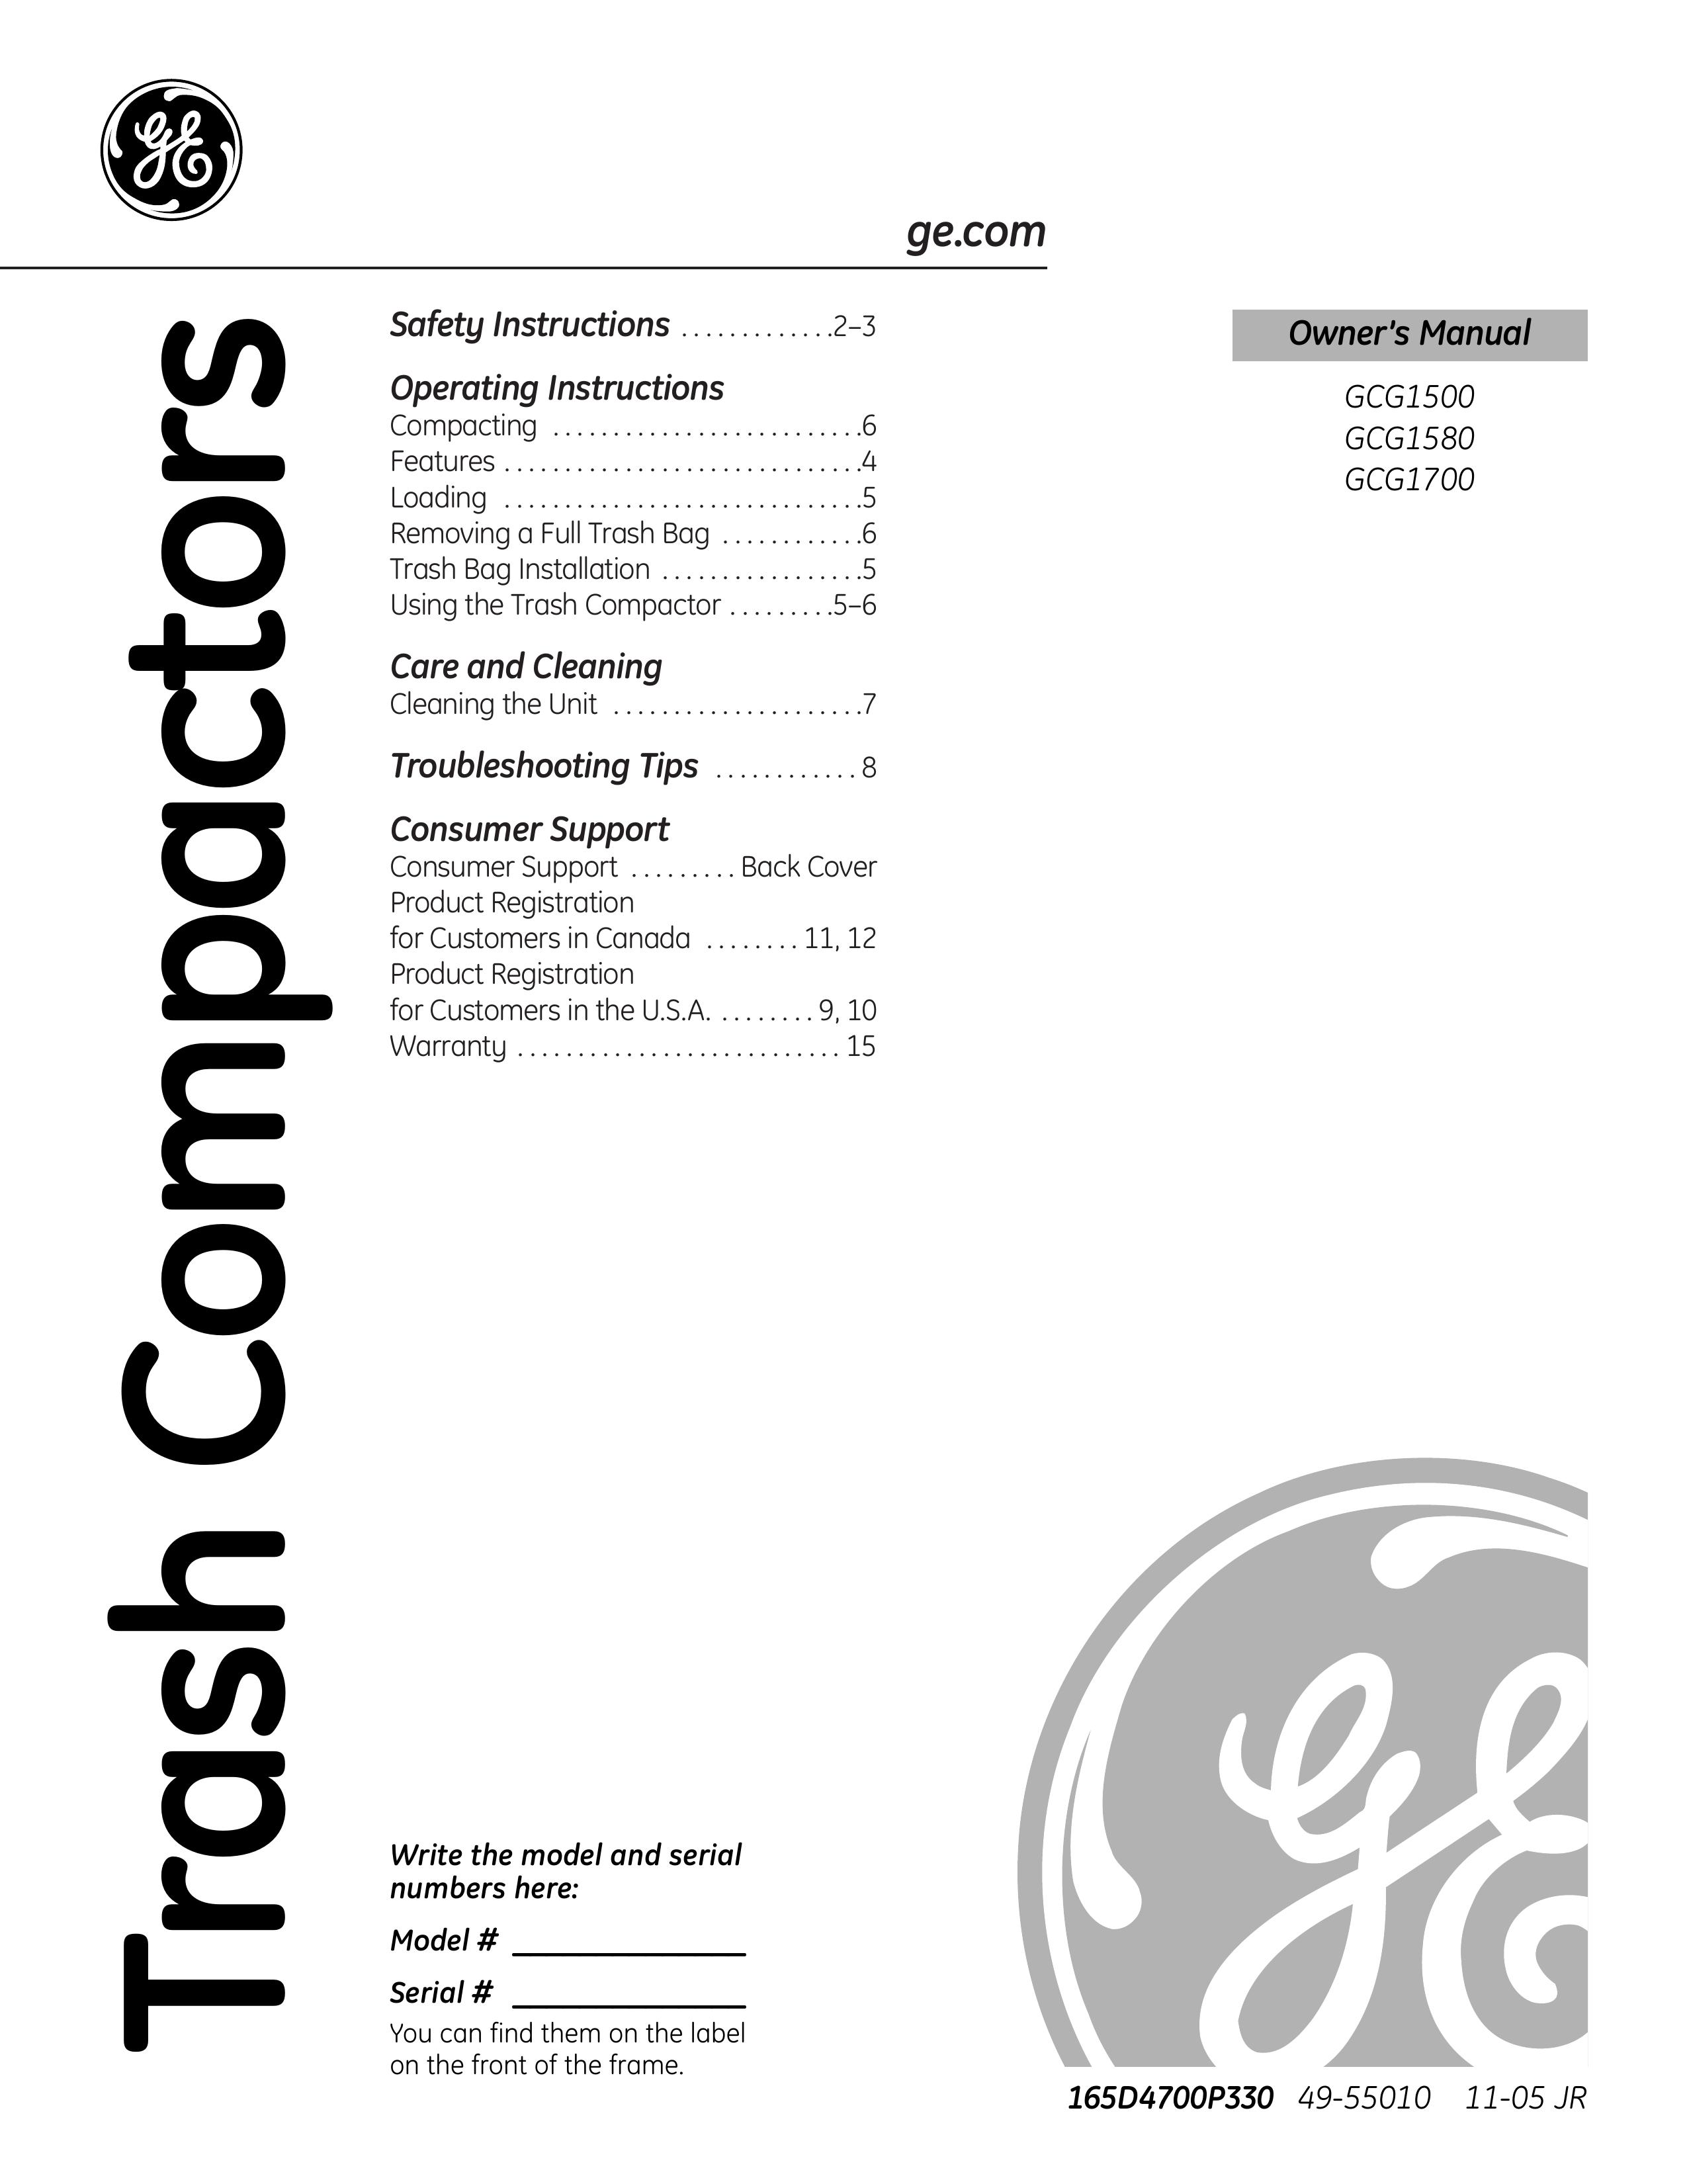 GE GCG1700 Trash Compactor User Manual